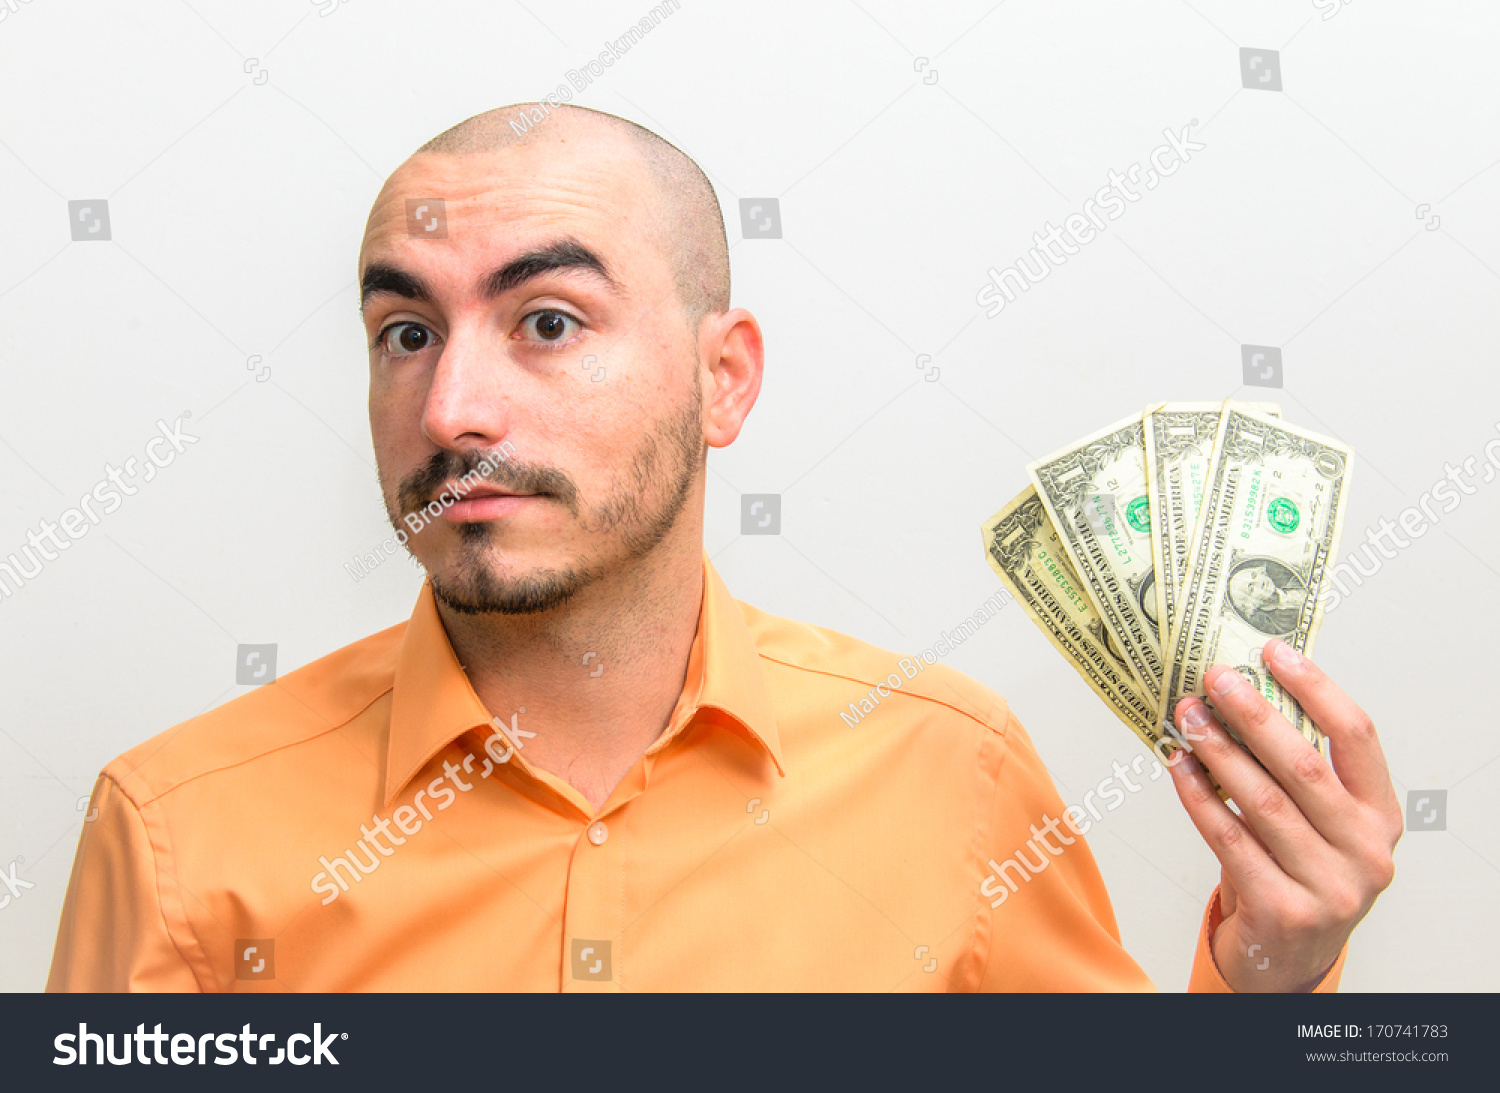 Men Portrait With His Few Dollars Left Stock Photo 170741783 : Shutterstock